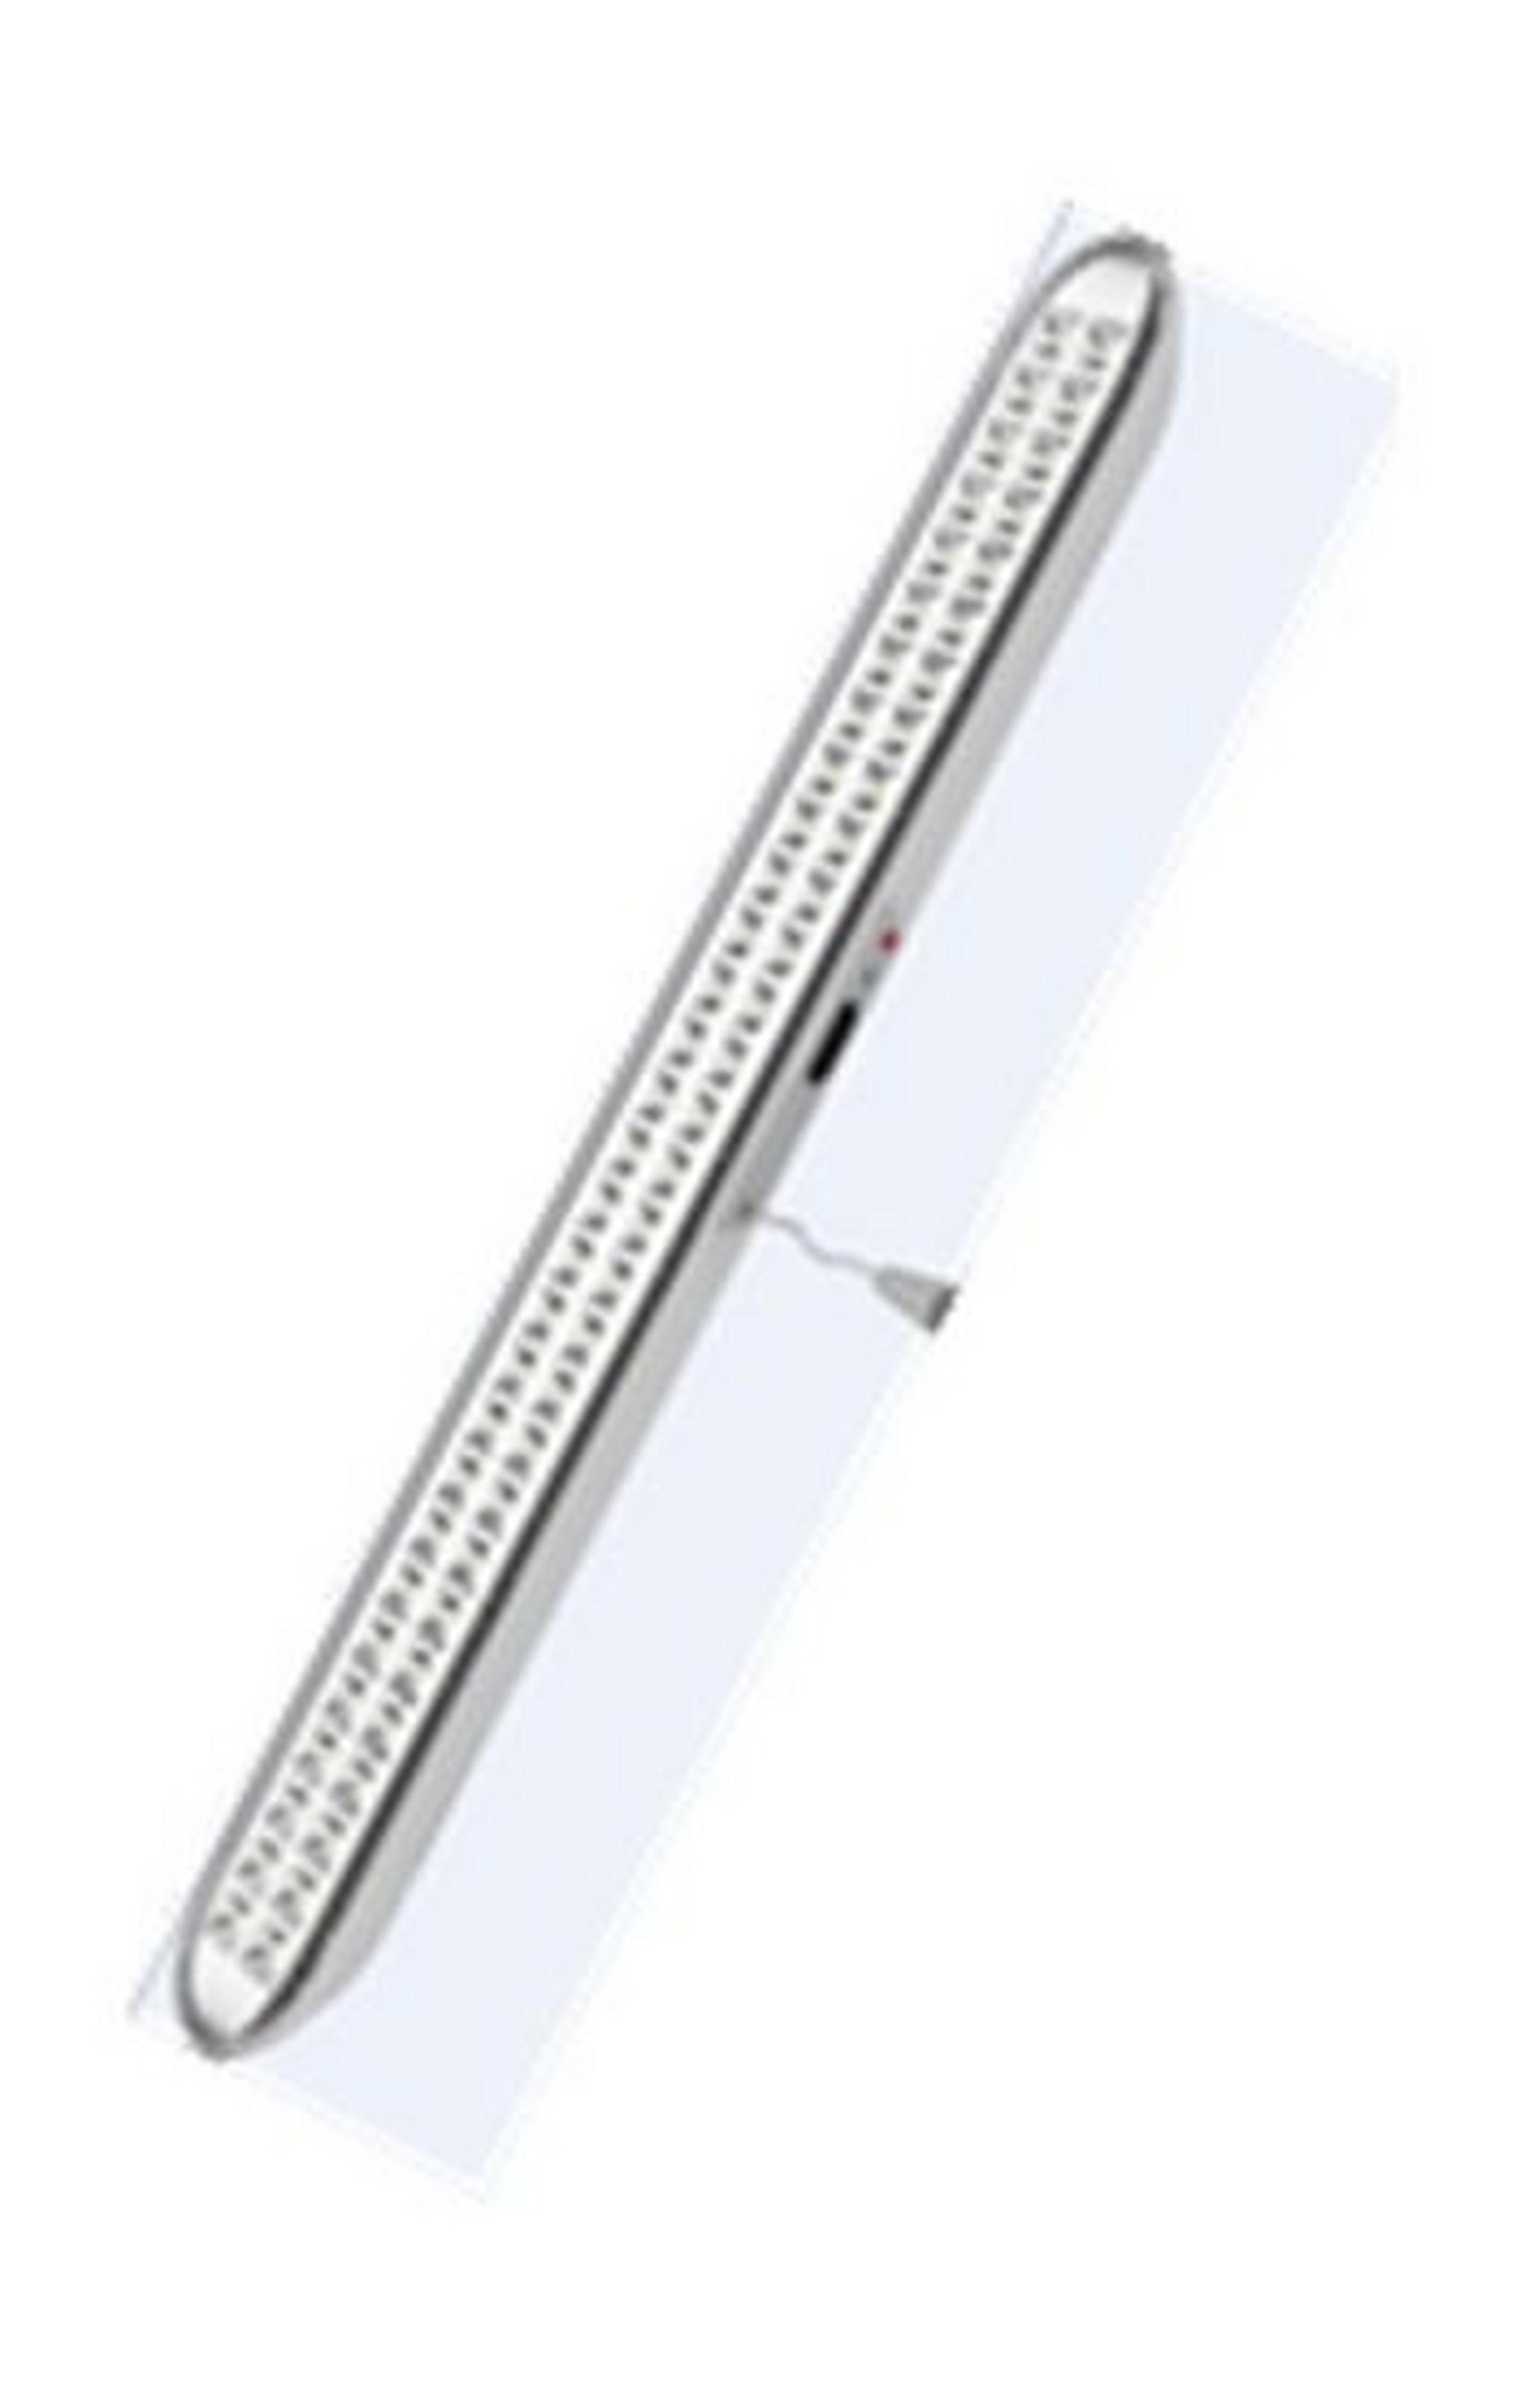 Frigidaire 60pcs LED Wall Emergency Light - FD9610